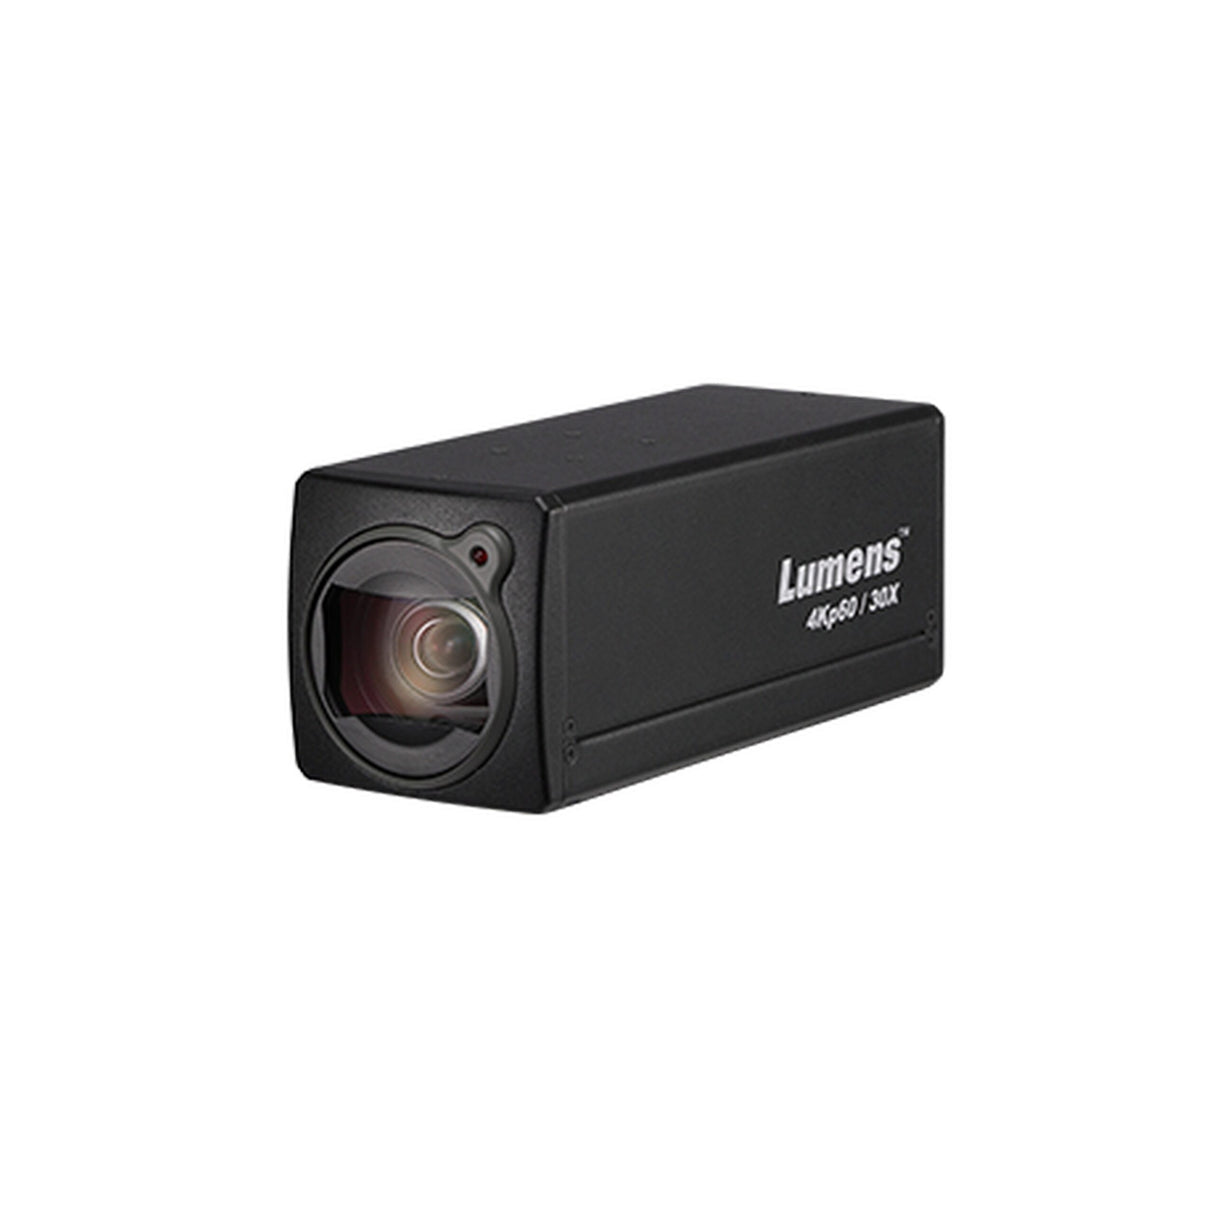 Lumens VC-BC701P 4Kp60 30x Box Camera, Black